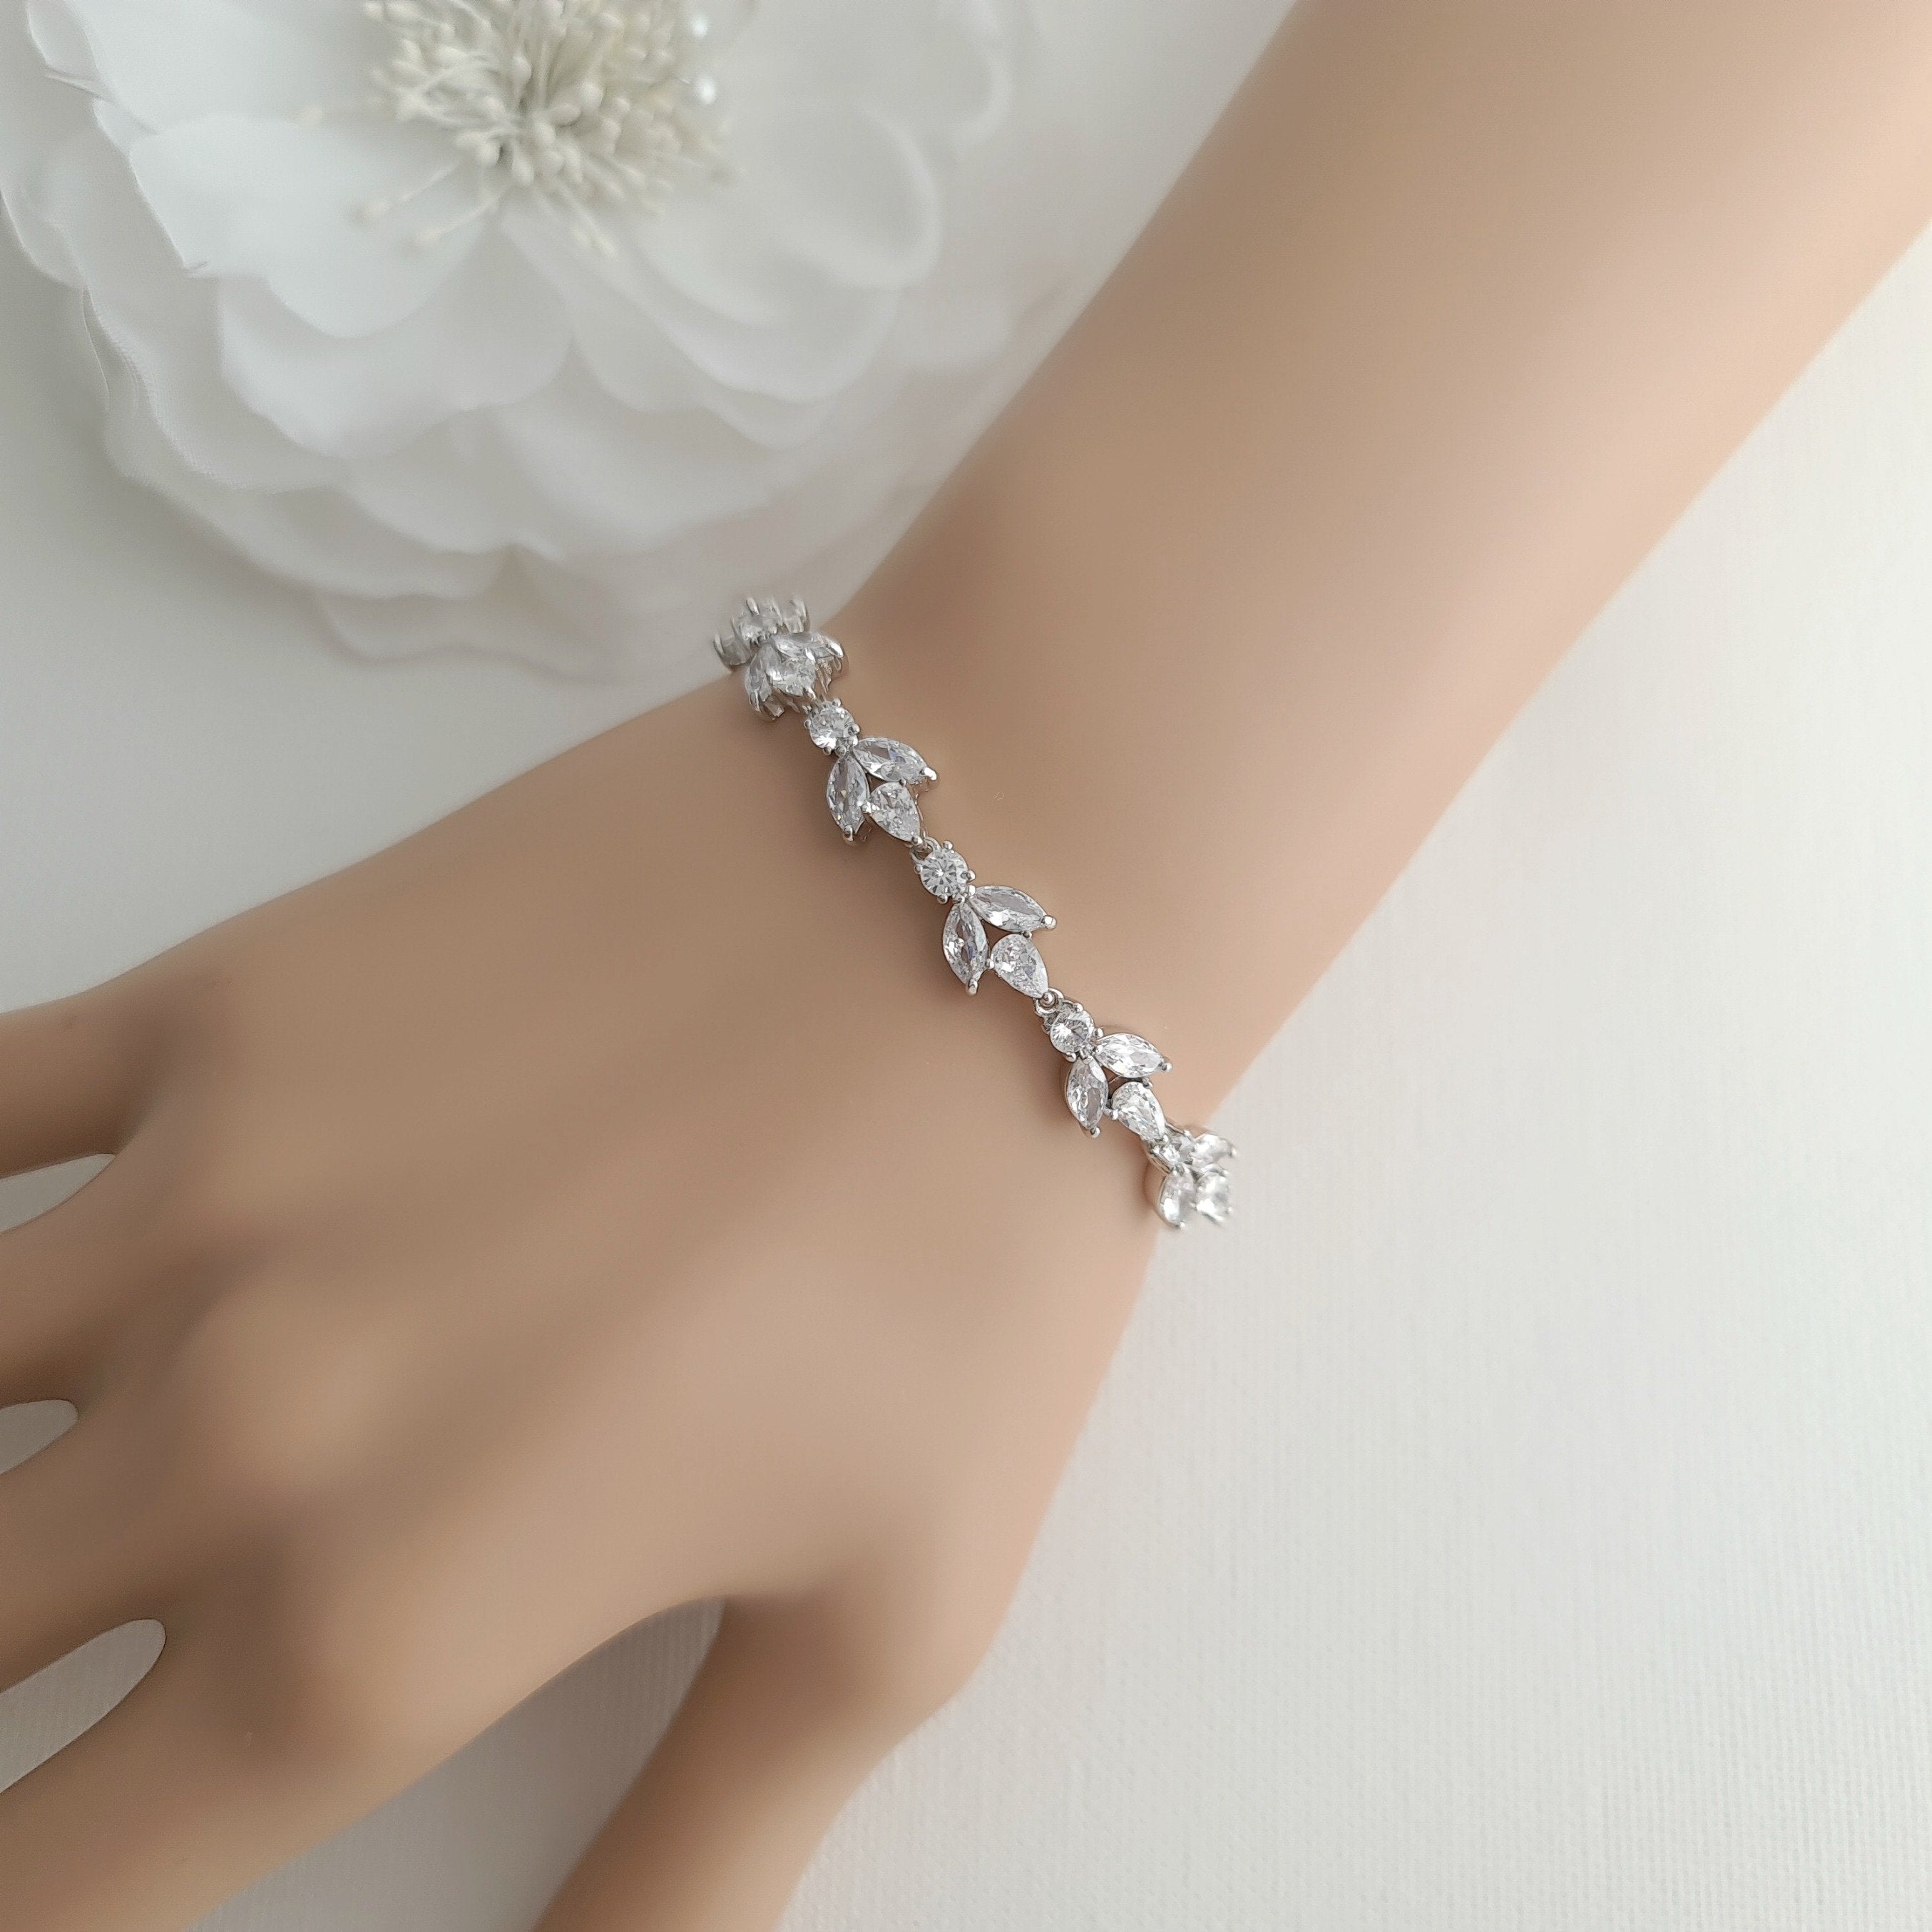 Wedding Day Luxury Bracelet On Brides Stock Photo 1538286821  Shutterstock